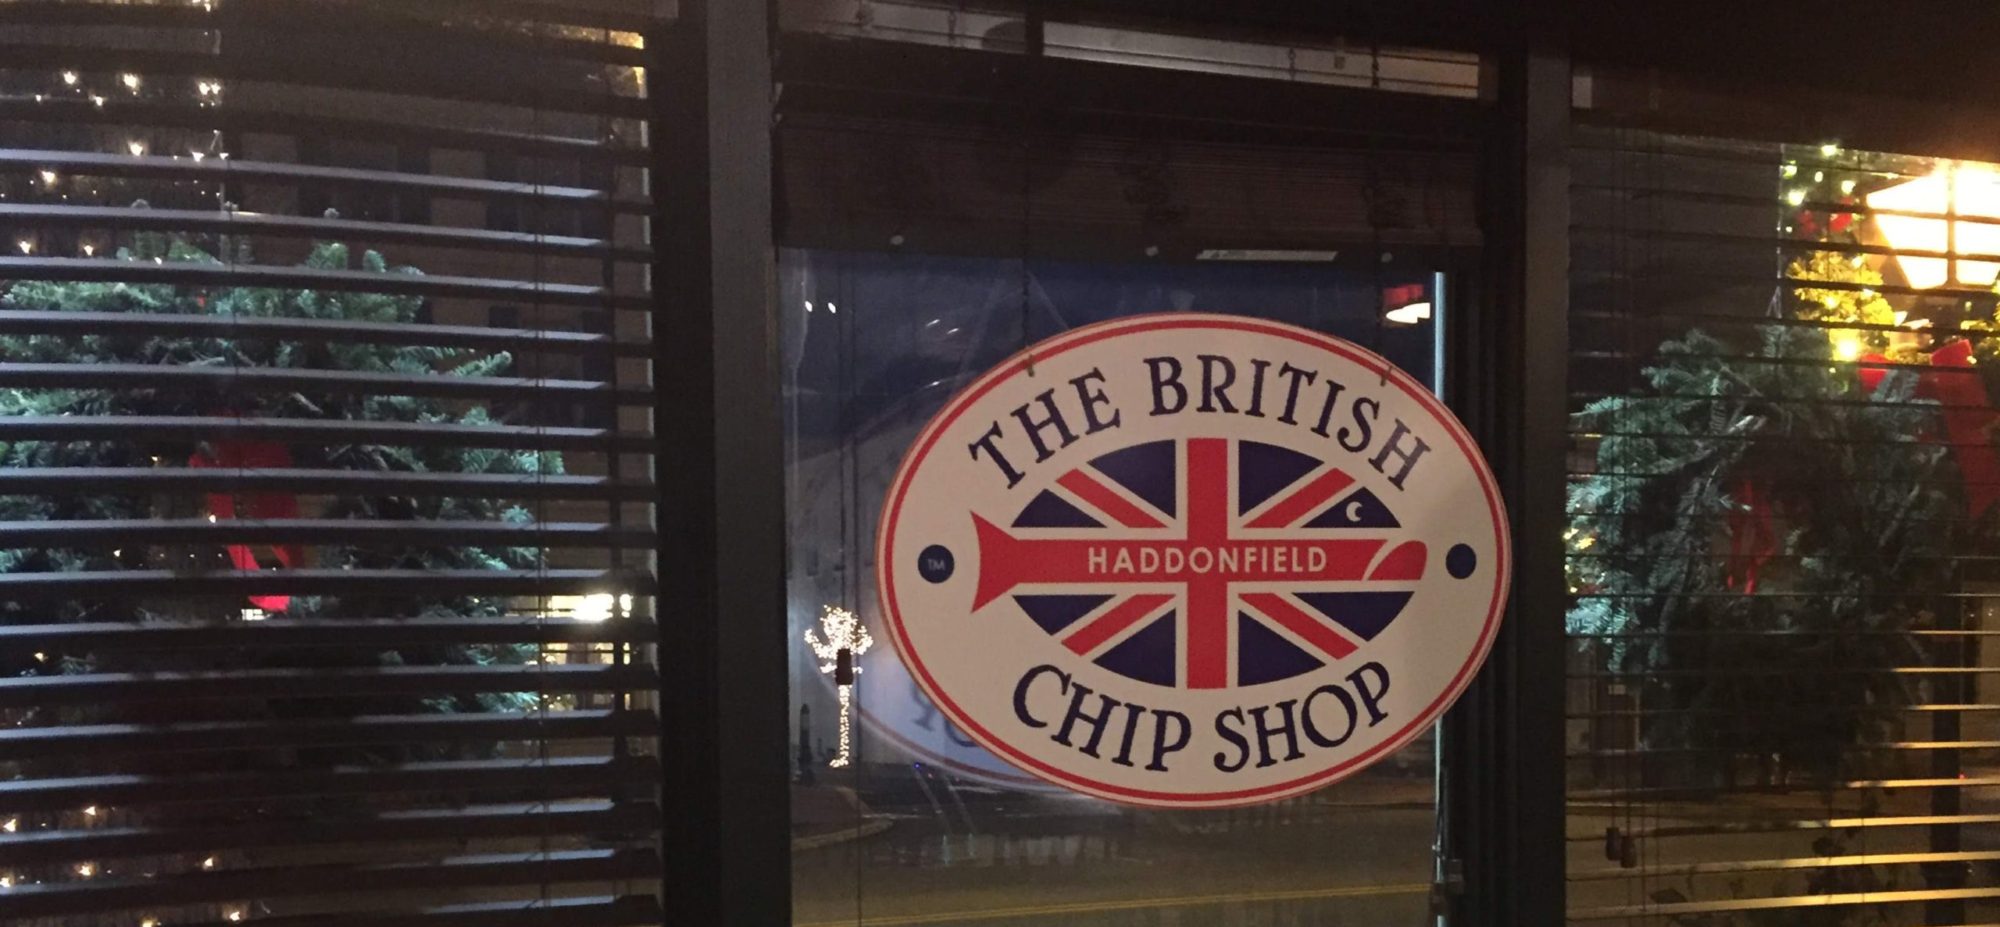 The British Chip Shop